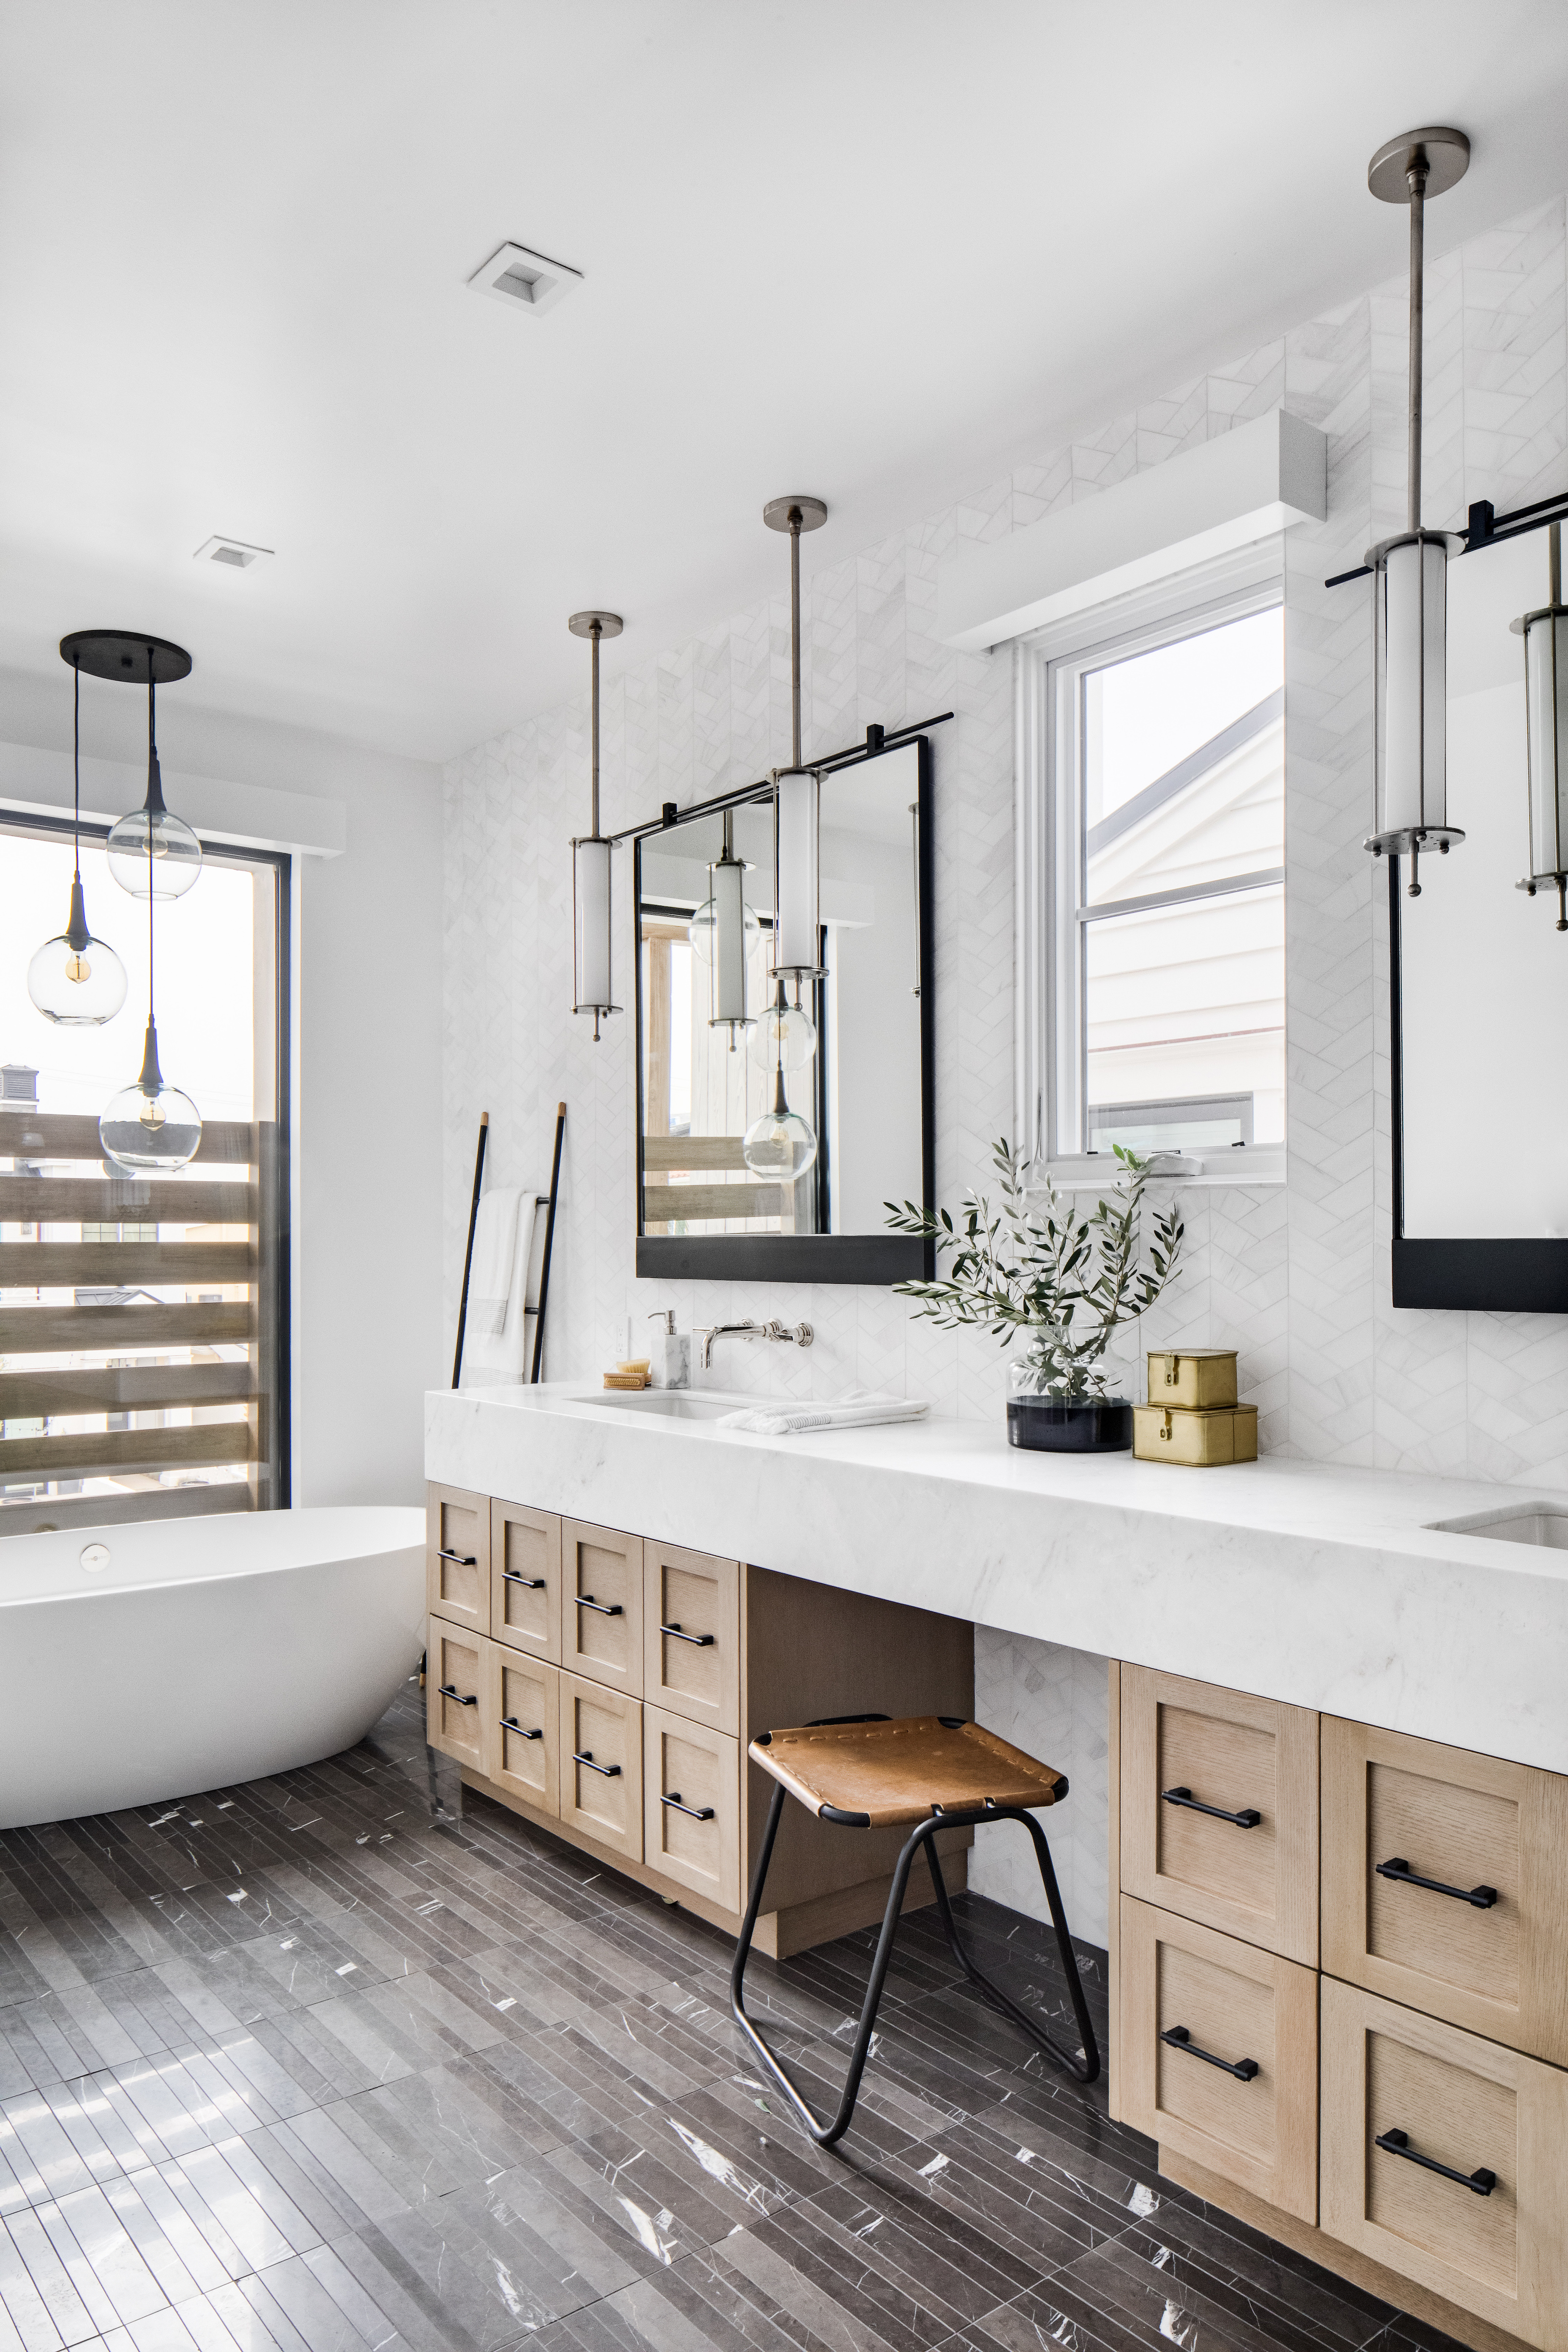 Bathroom vanity ideas: 12 beautiful designs to uplift your space